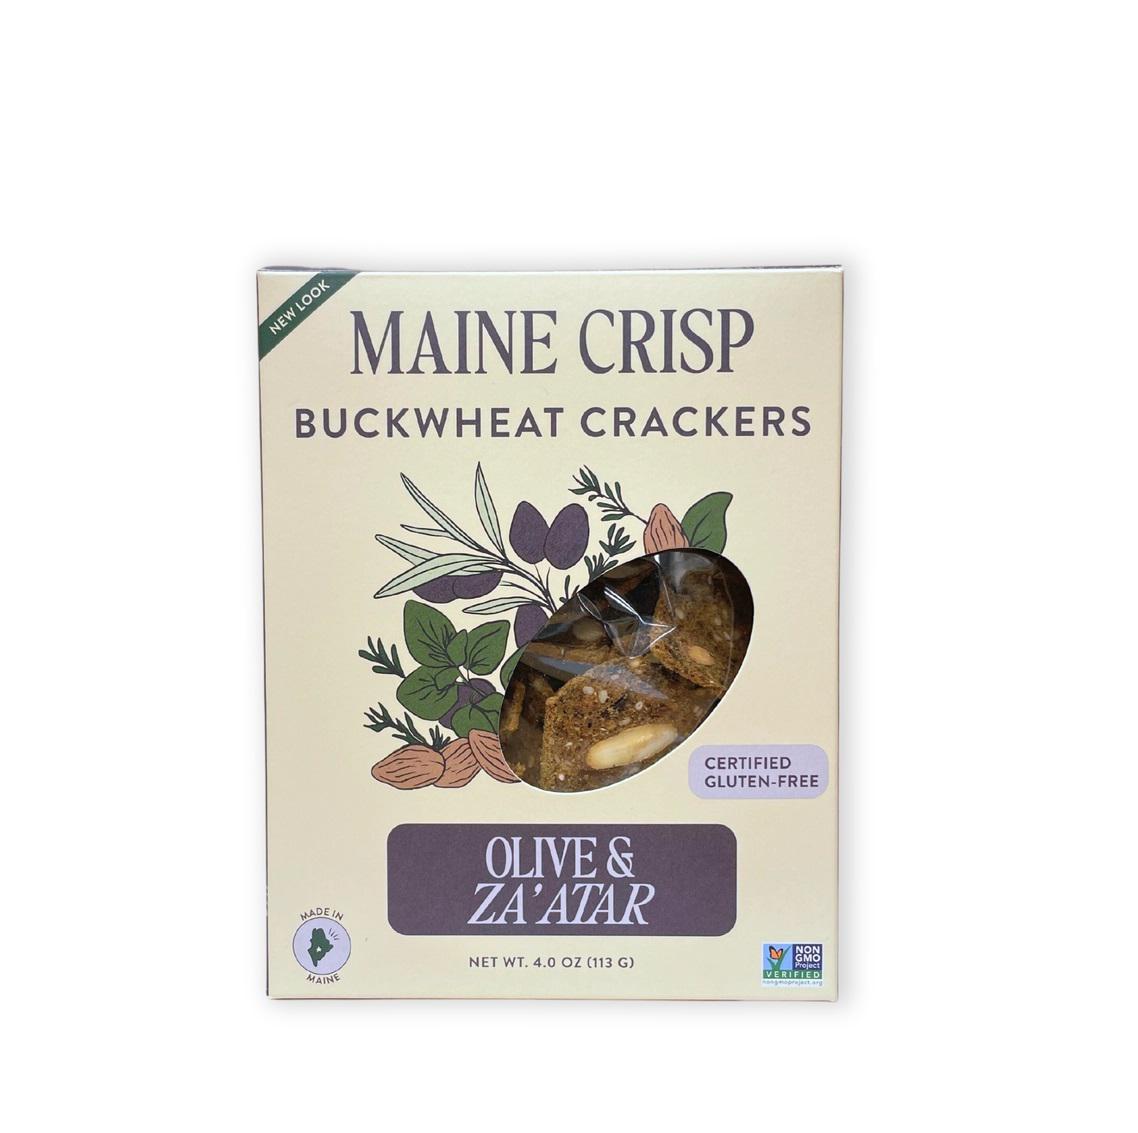 Maine Crisp Buckwheat Crackers - Olive and Za'atr